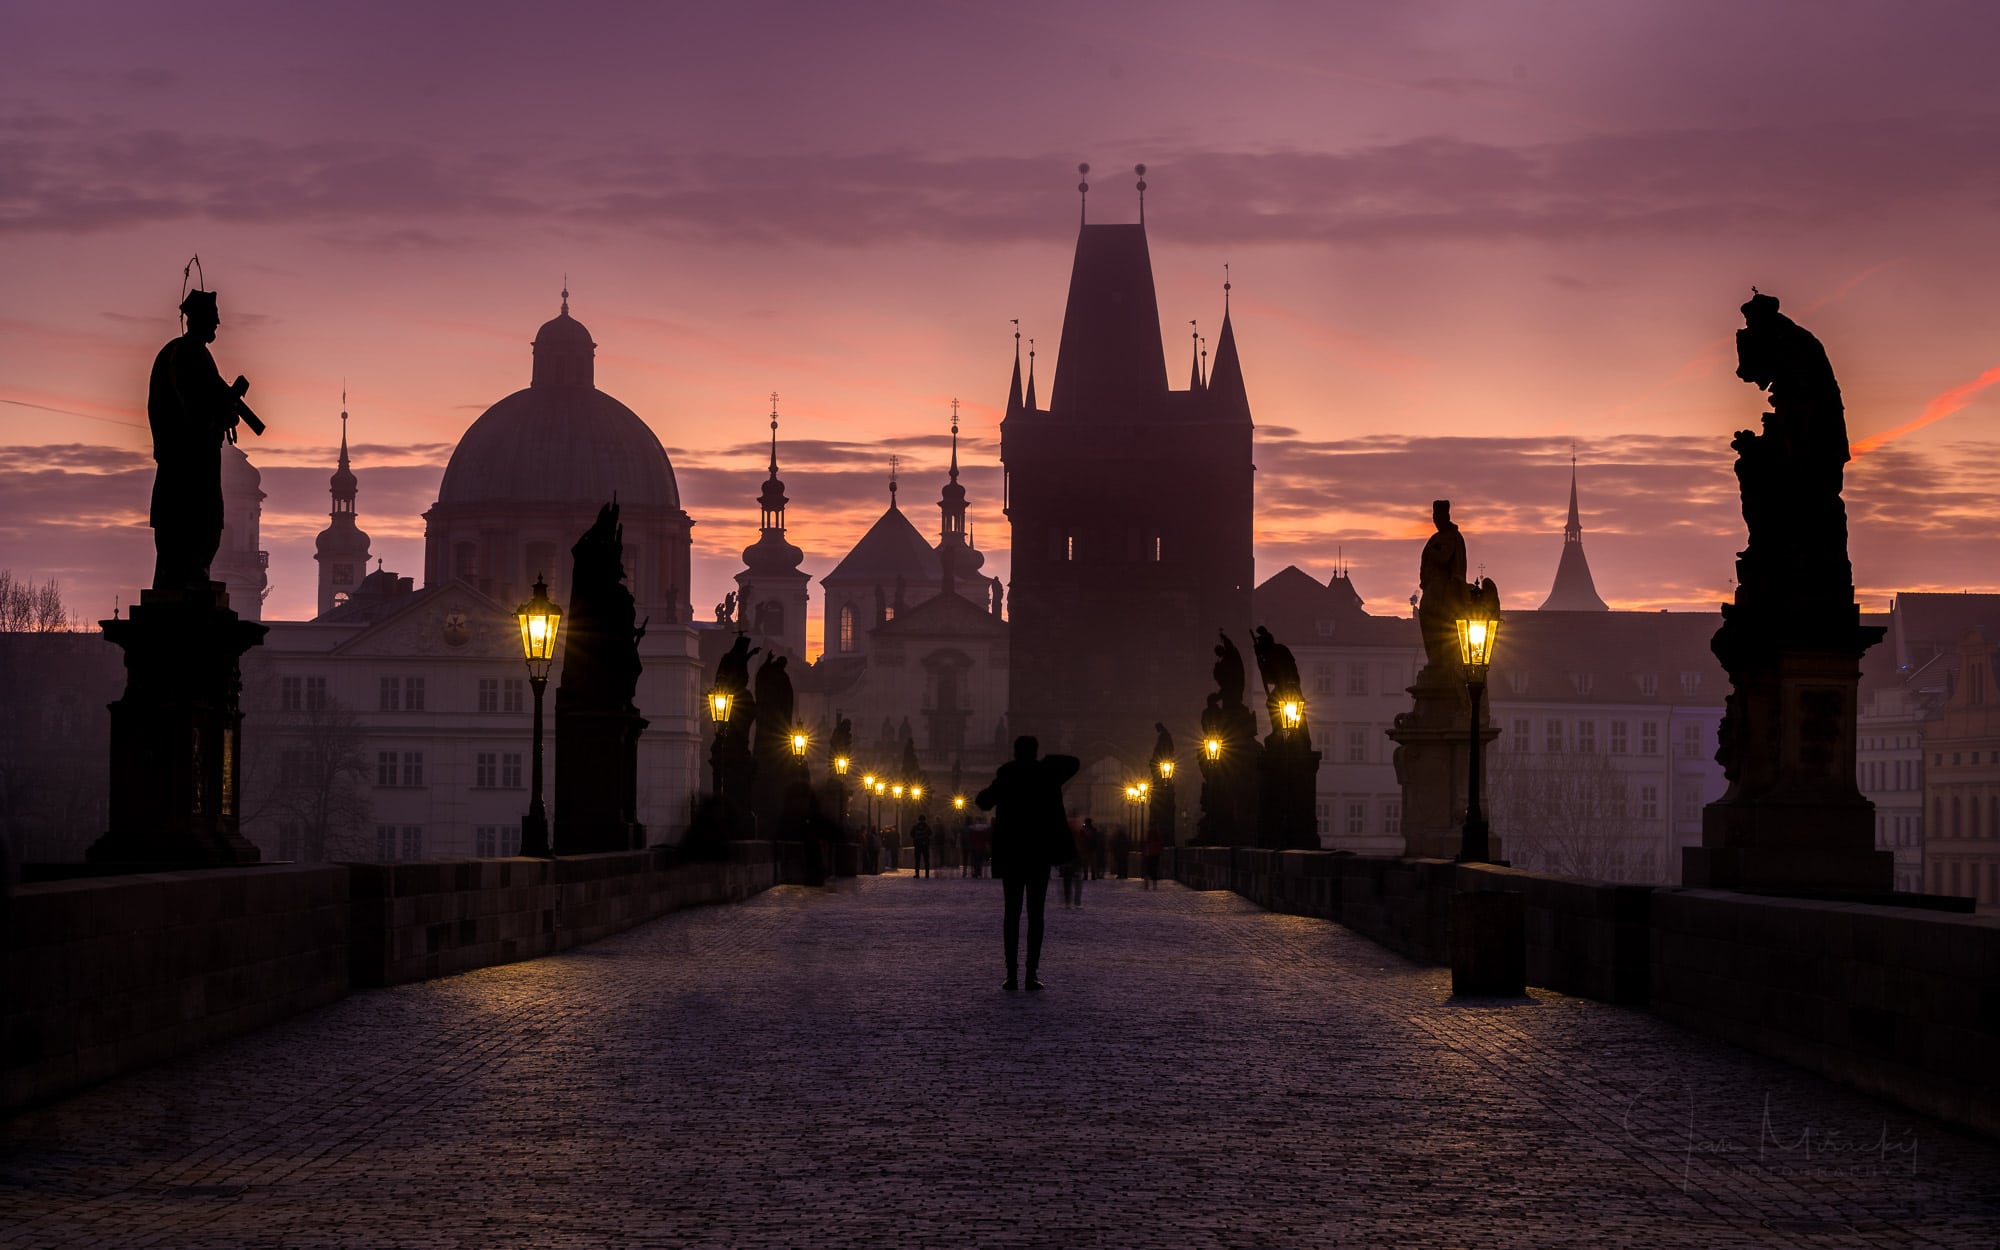 Early morning at Charles bridge, Prague